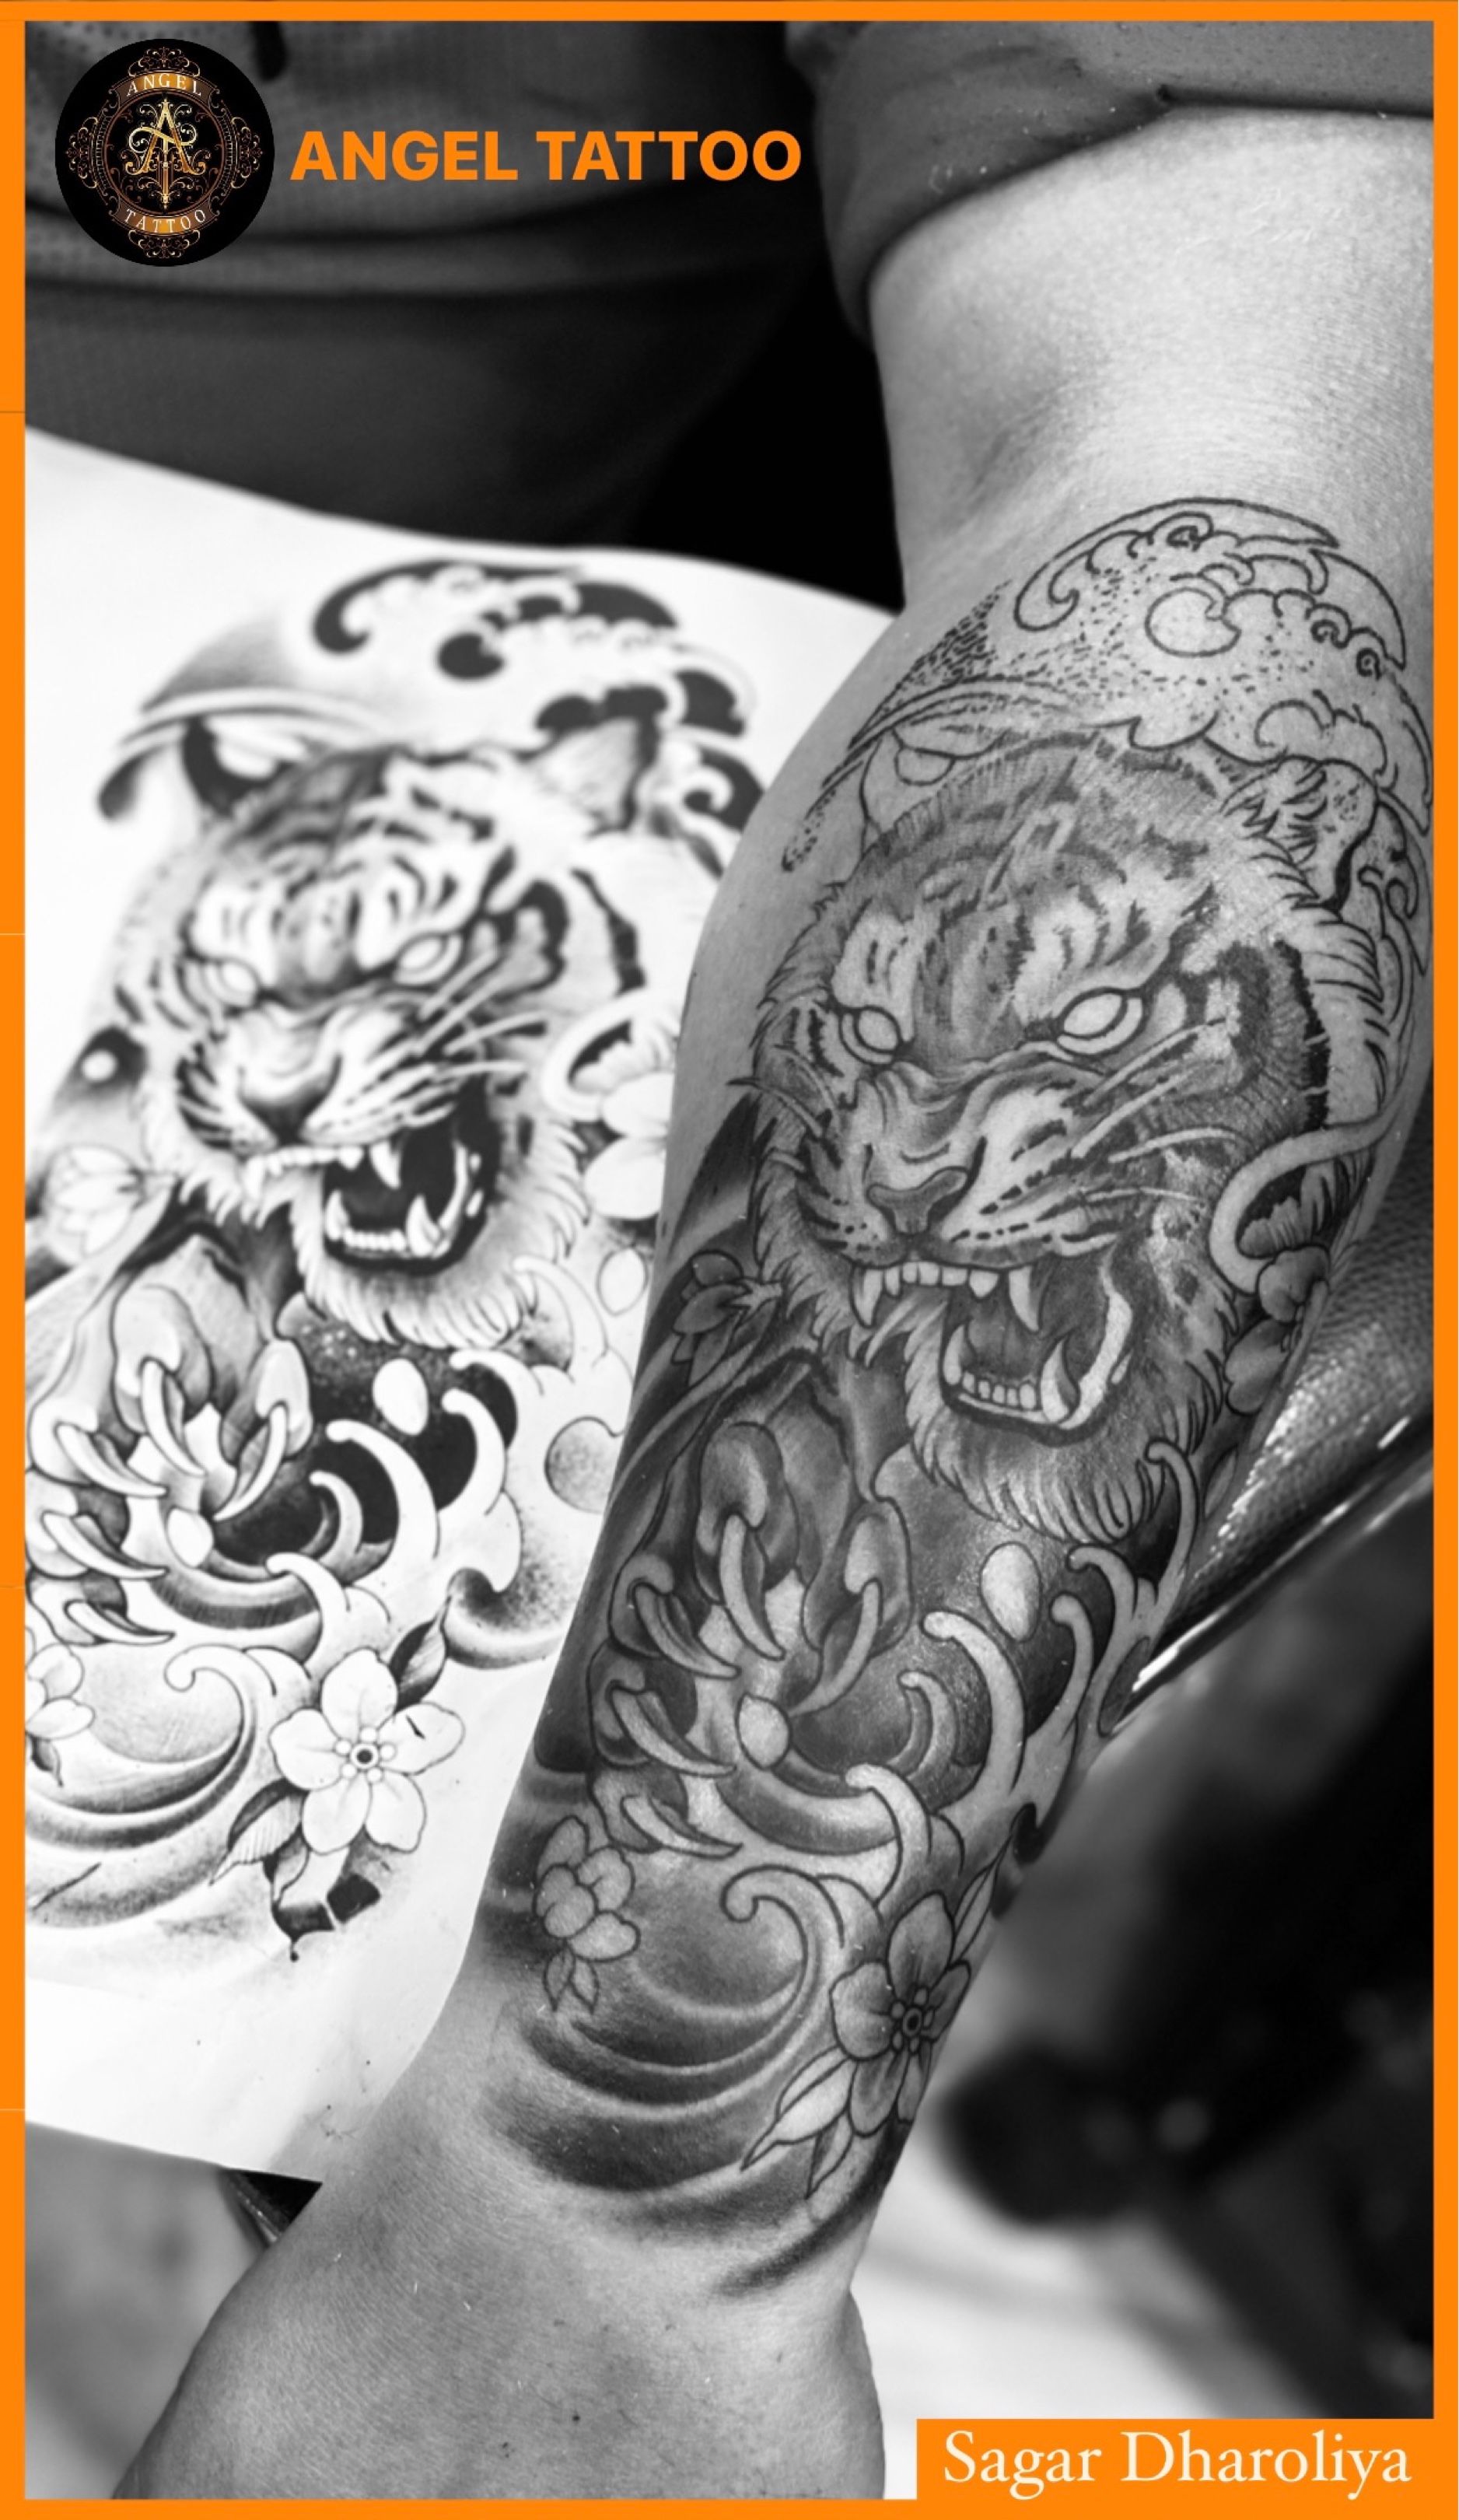 Shiva Tattoo By Mukesh Waghela The Best Tattoo Artist In Goa At Moksha Tattoo  Studio Goa India. - Best Tattoo Studio Goa, Safe, Hygienic - Moksha Tattoo